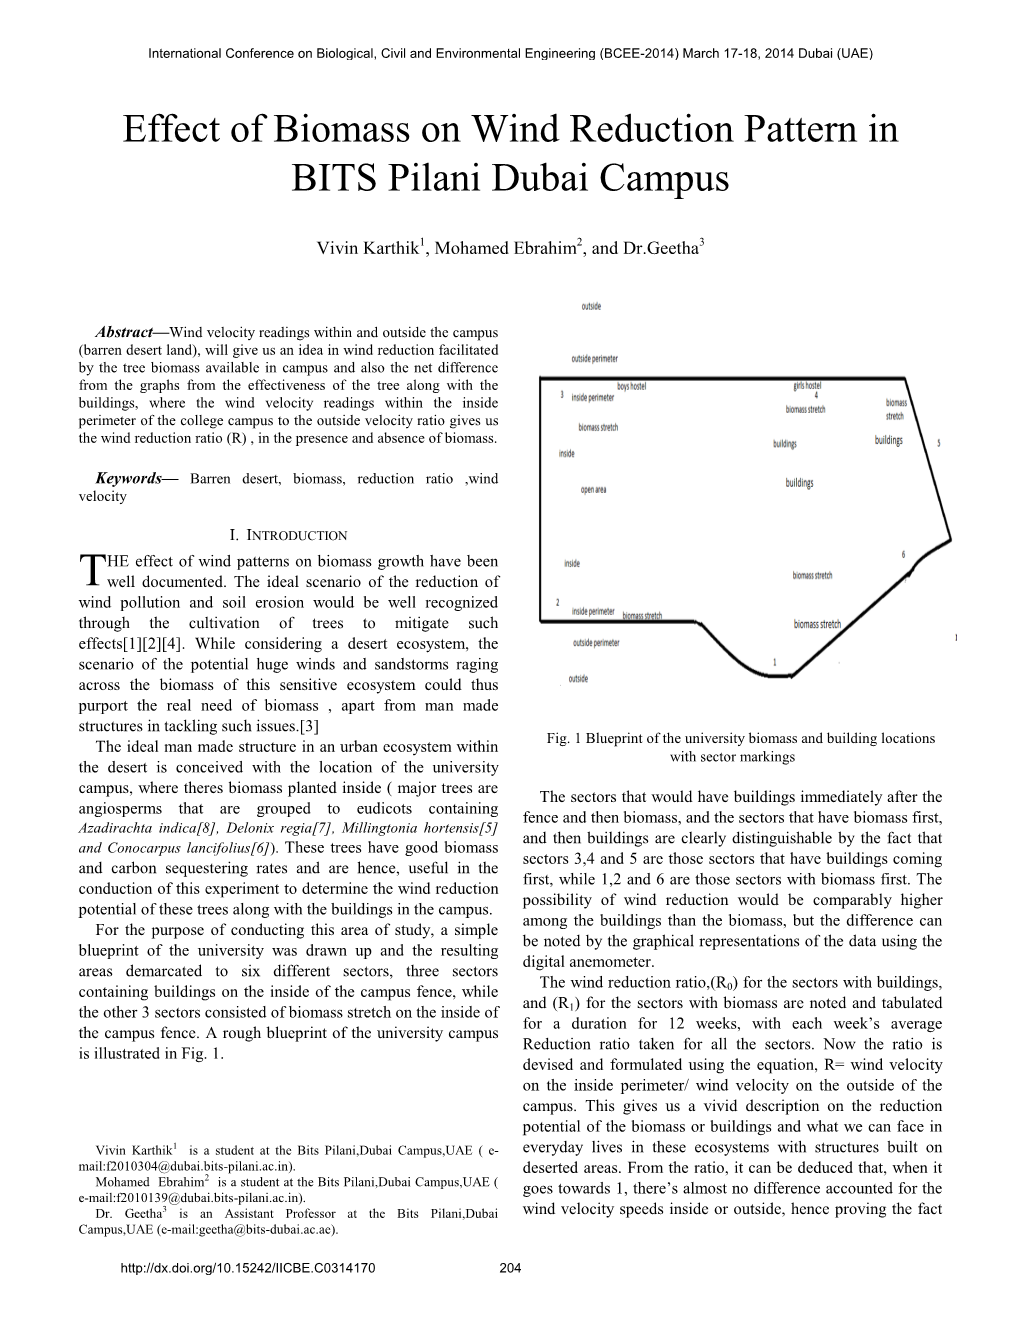 Effect of Biomass on Wind Reduction Pattern in BITS Pilani Dubai Campus